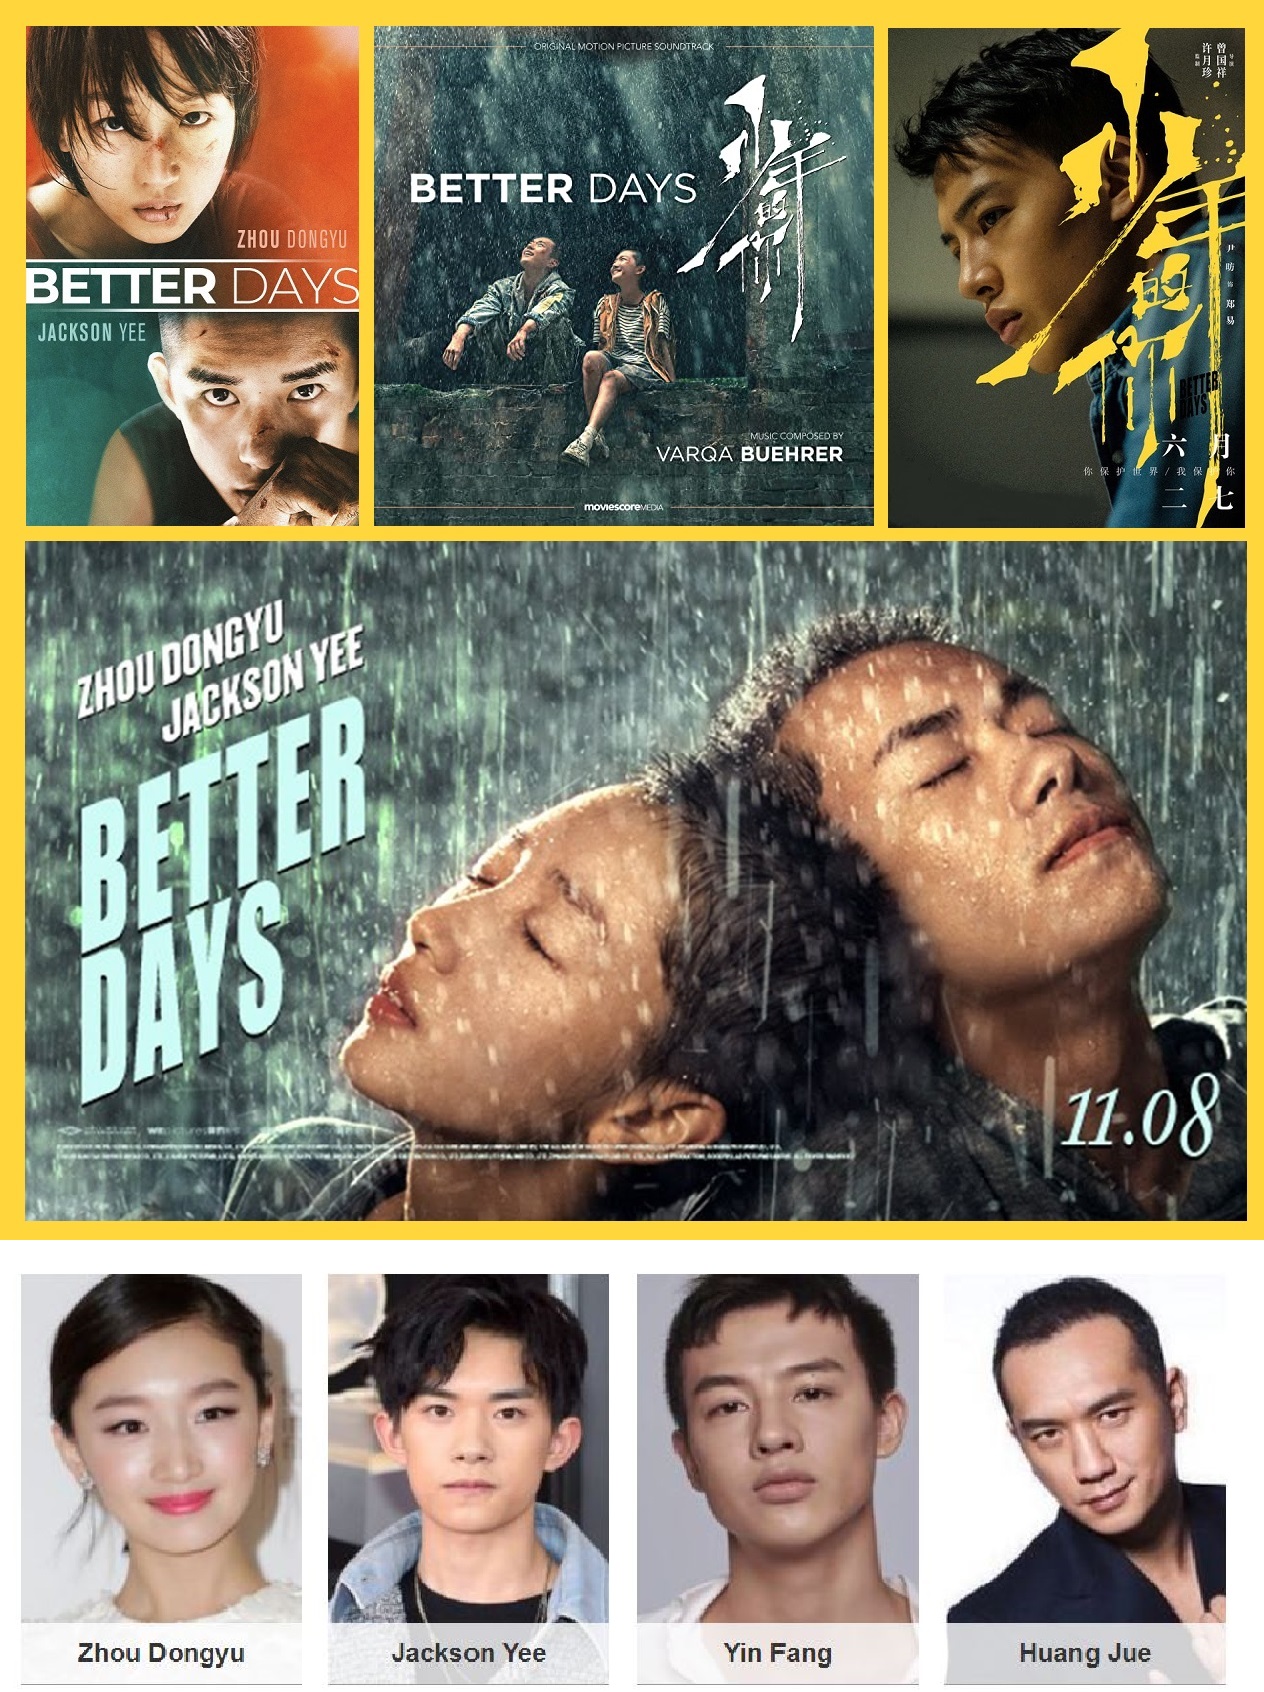 Better Days (Varqa Buehrer) – MovieScore Media